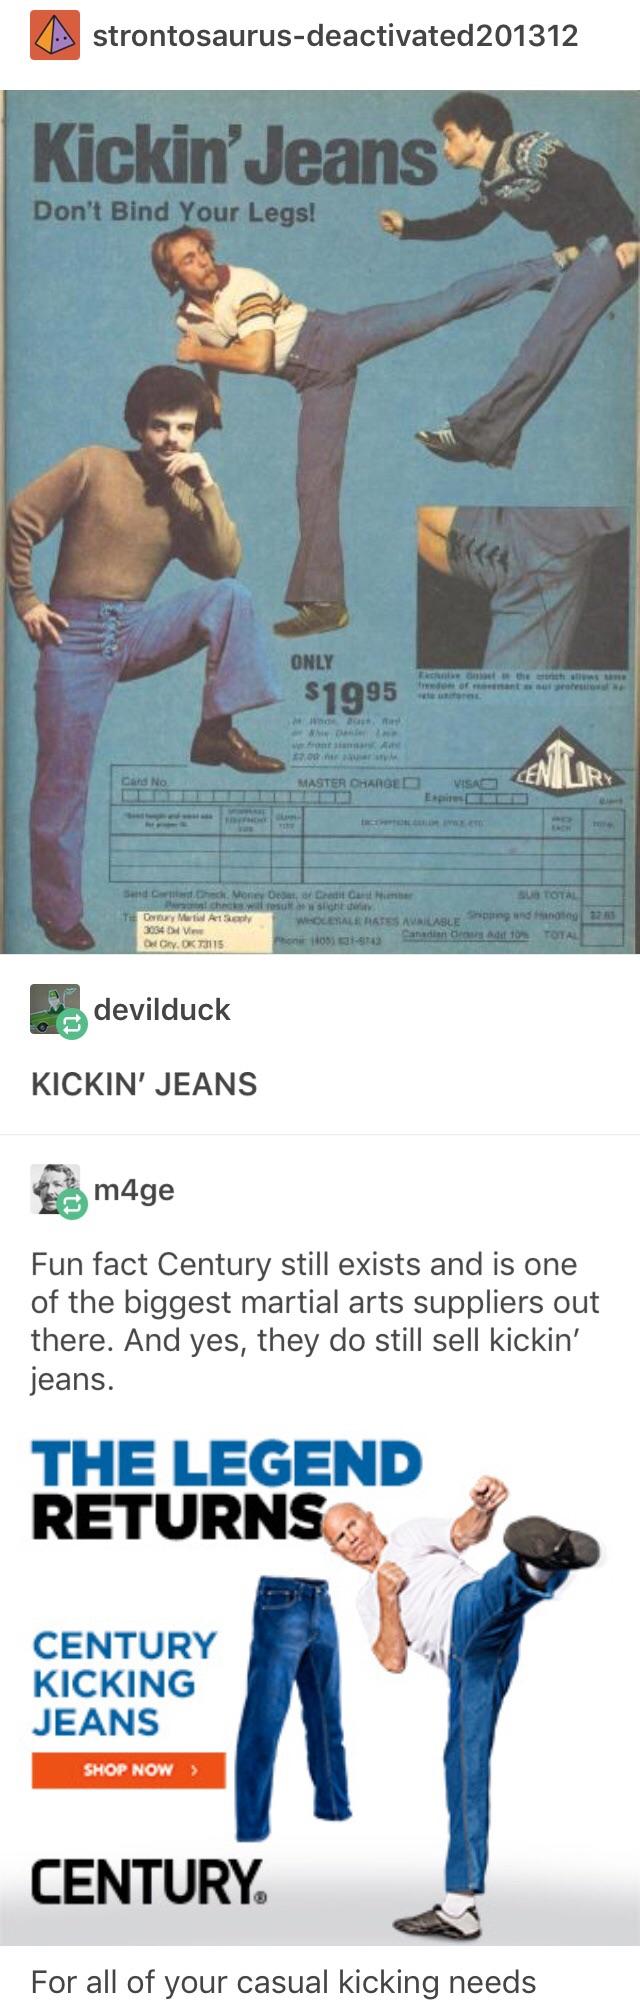 Get urself a pair of Kicking Jeans!